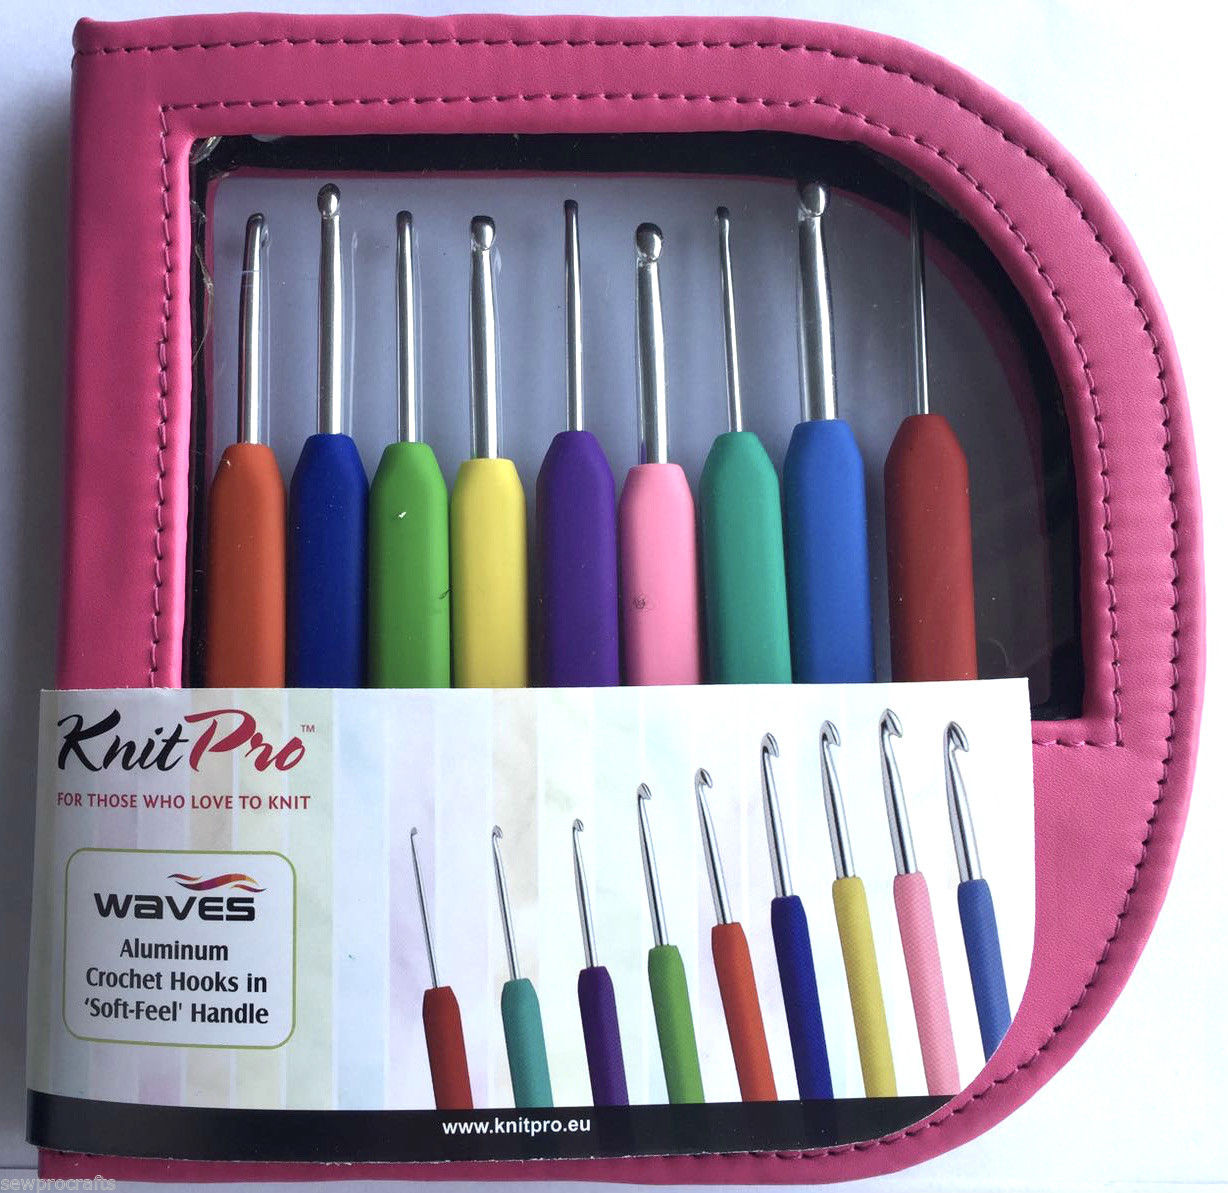 KnitPro Waves Soft Grip Colourful Handle Crochet Hooks 2mm - 12mm